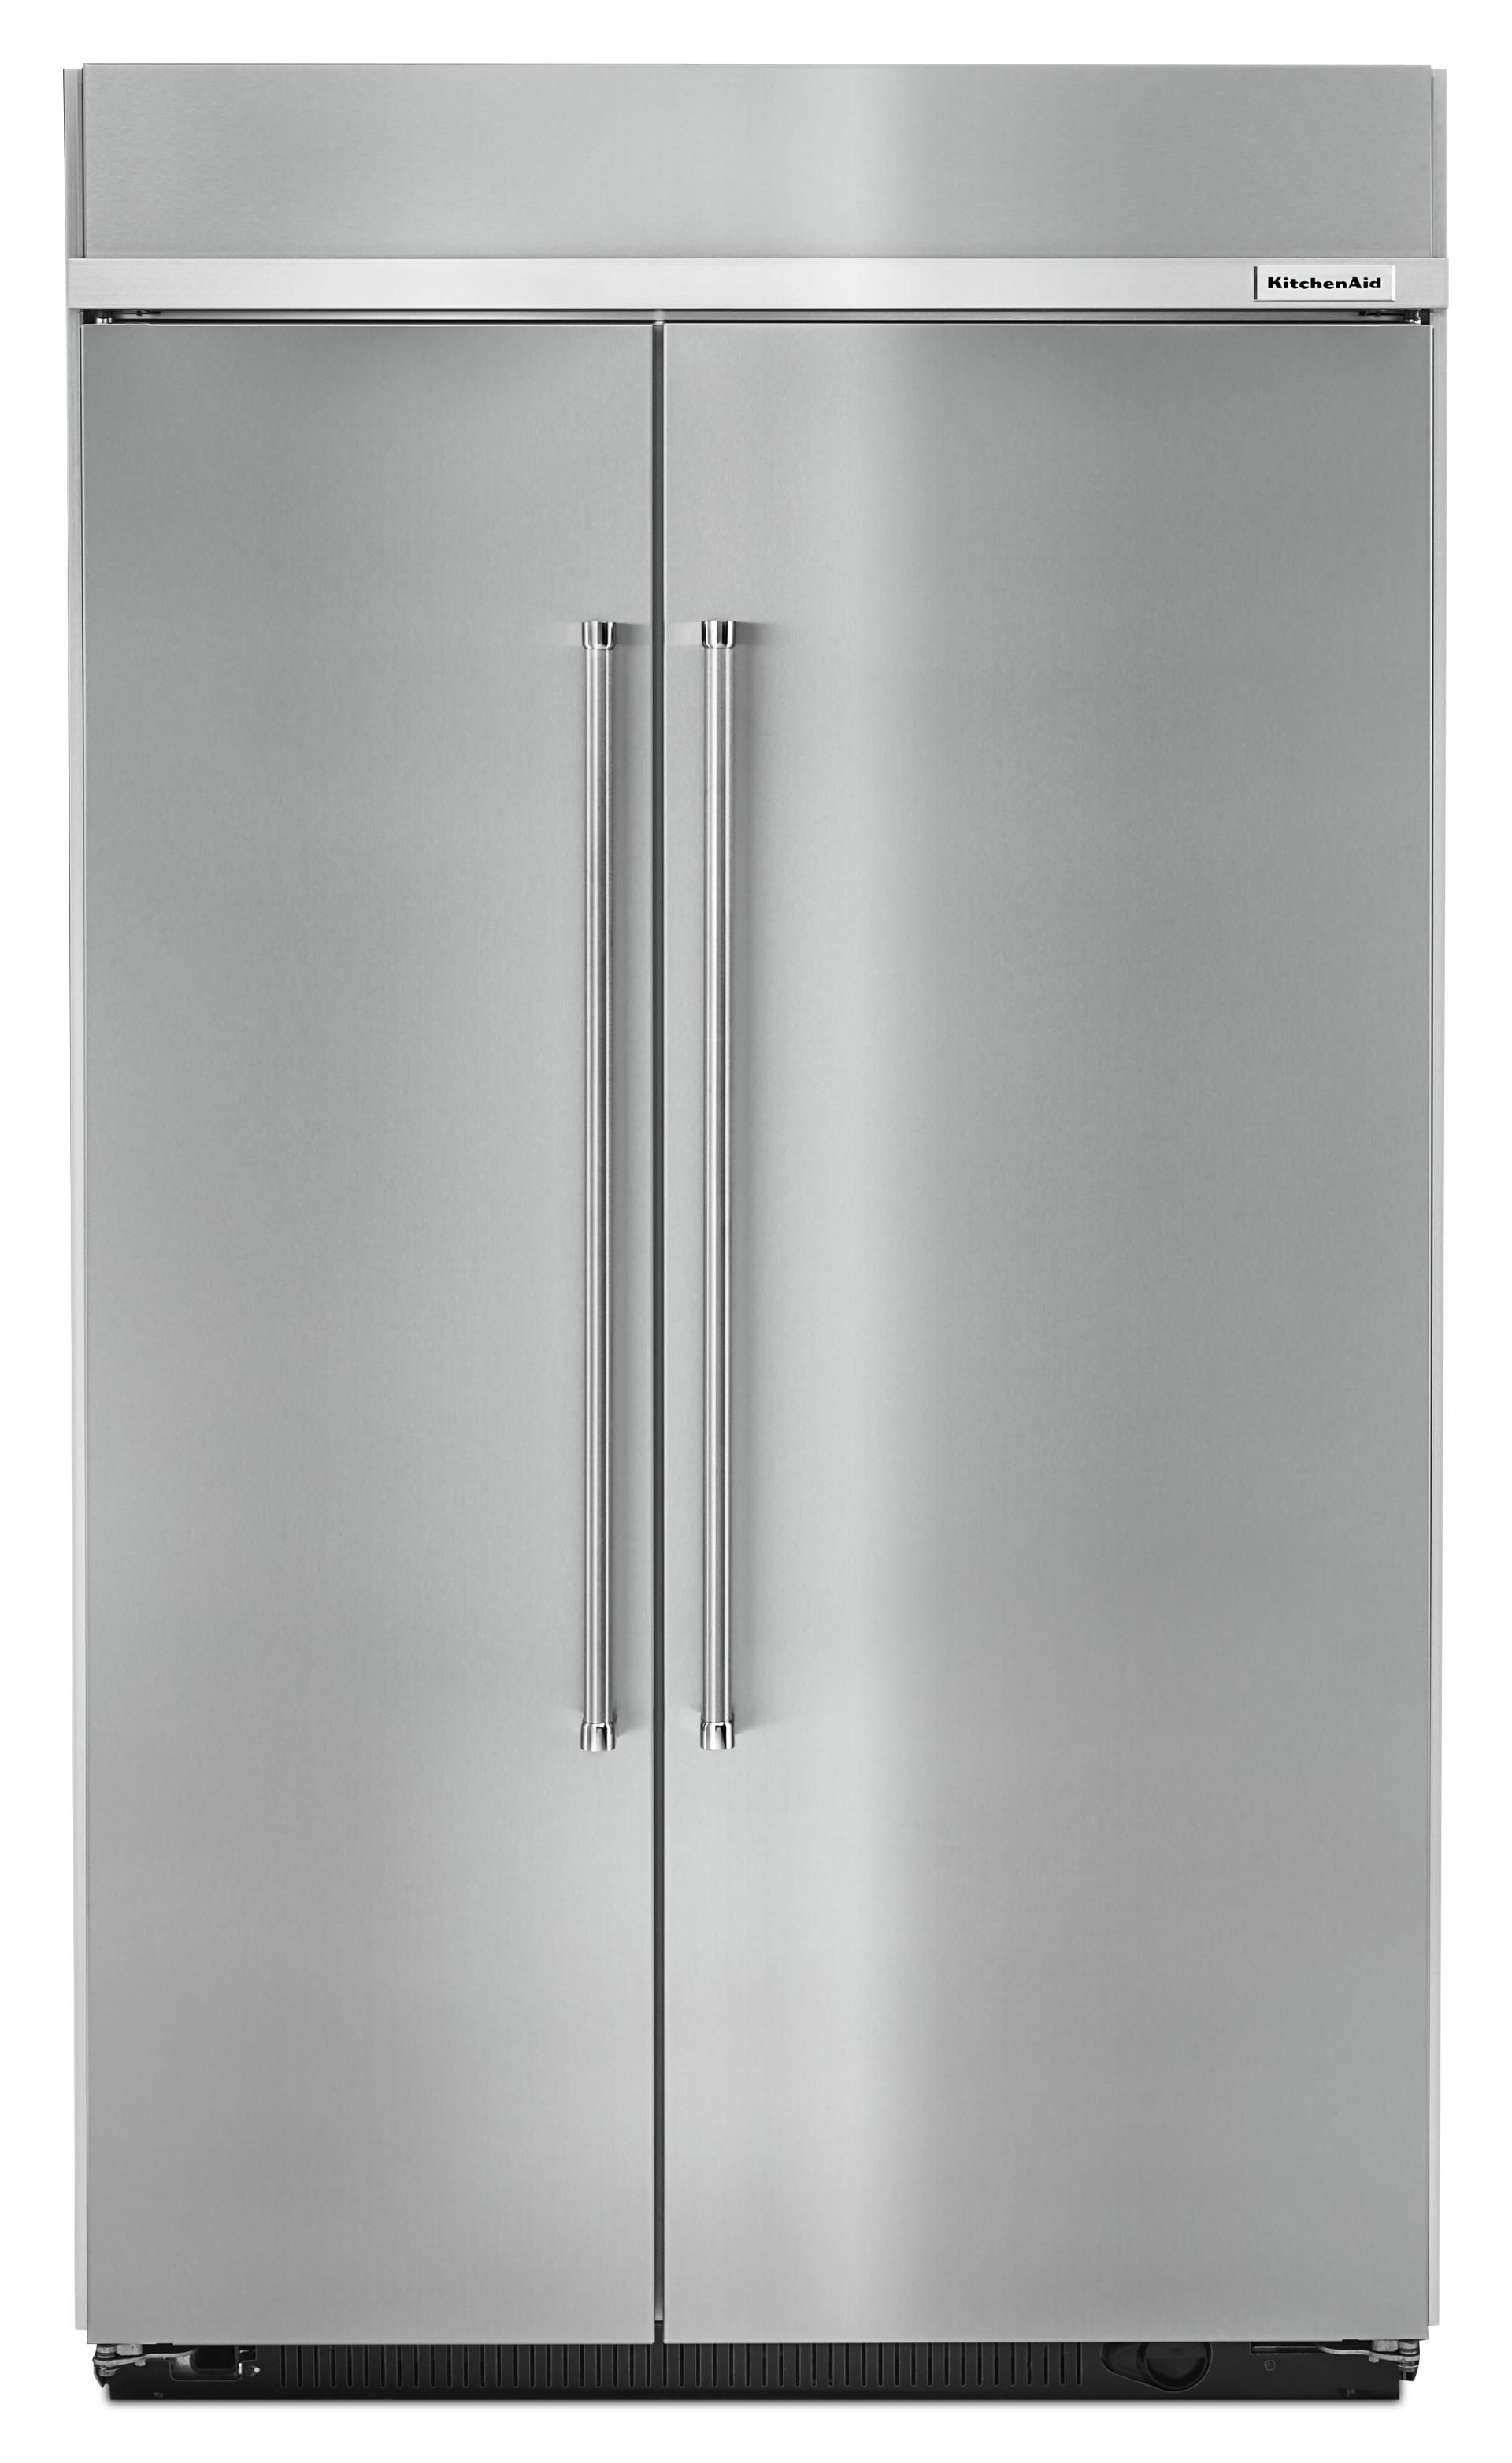 17+ Kitchenaid superba refrigerator specs ideas